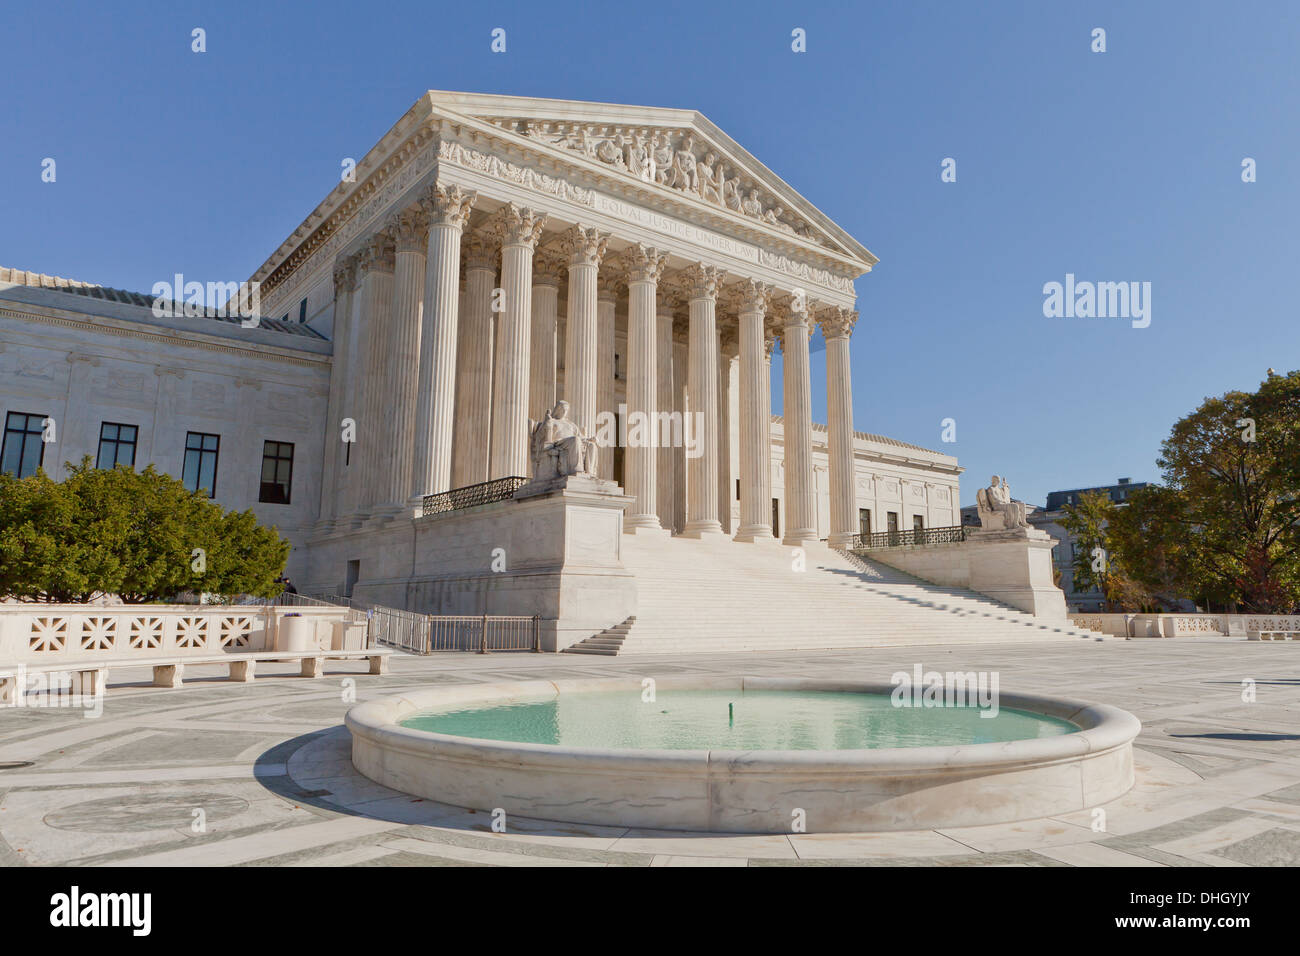 US Supreme Court building - Washington, DC USA Stock Photo